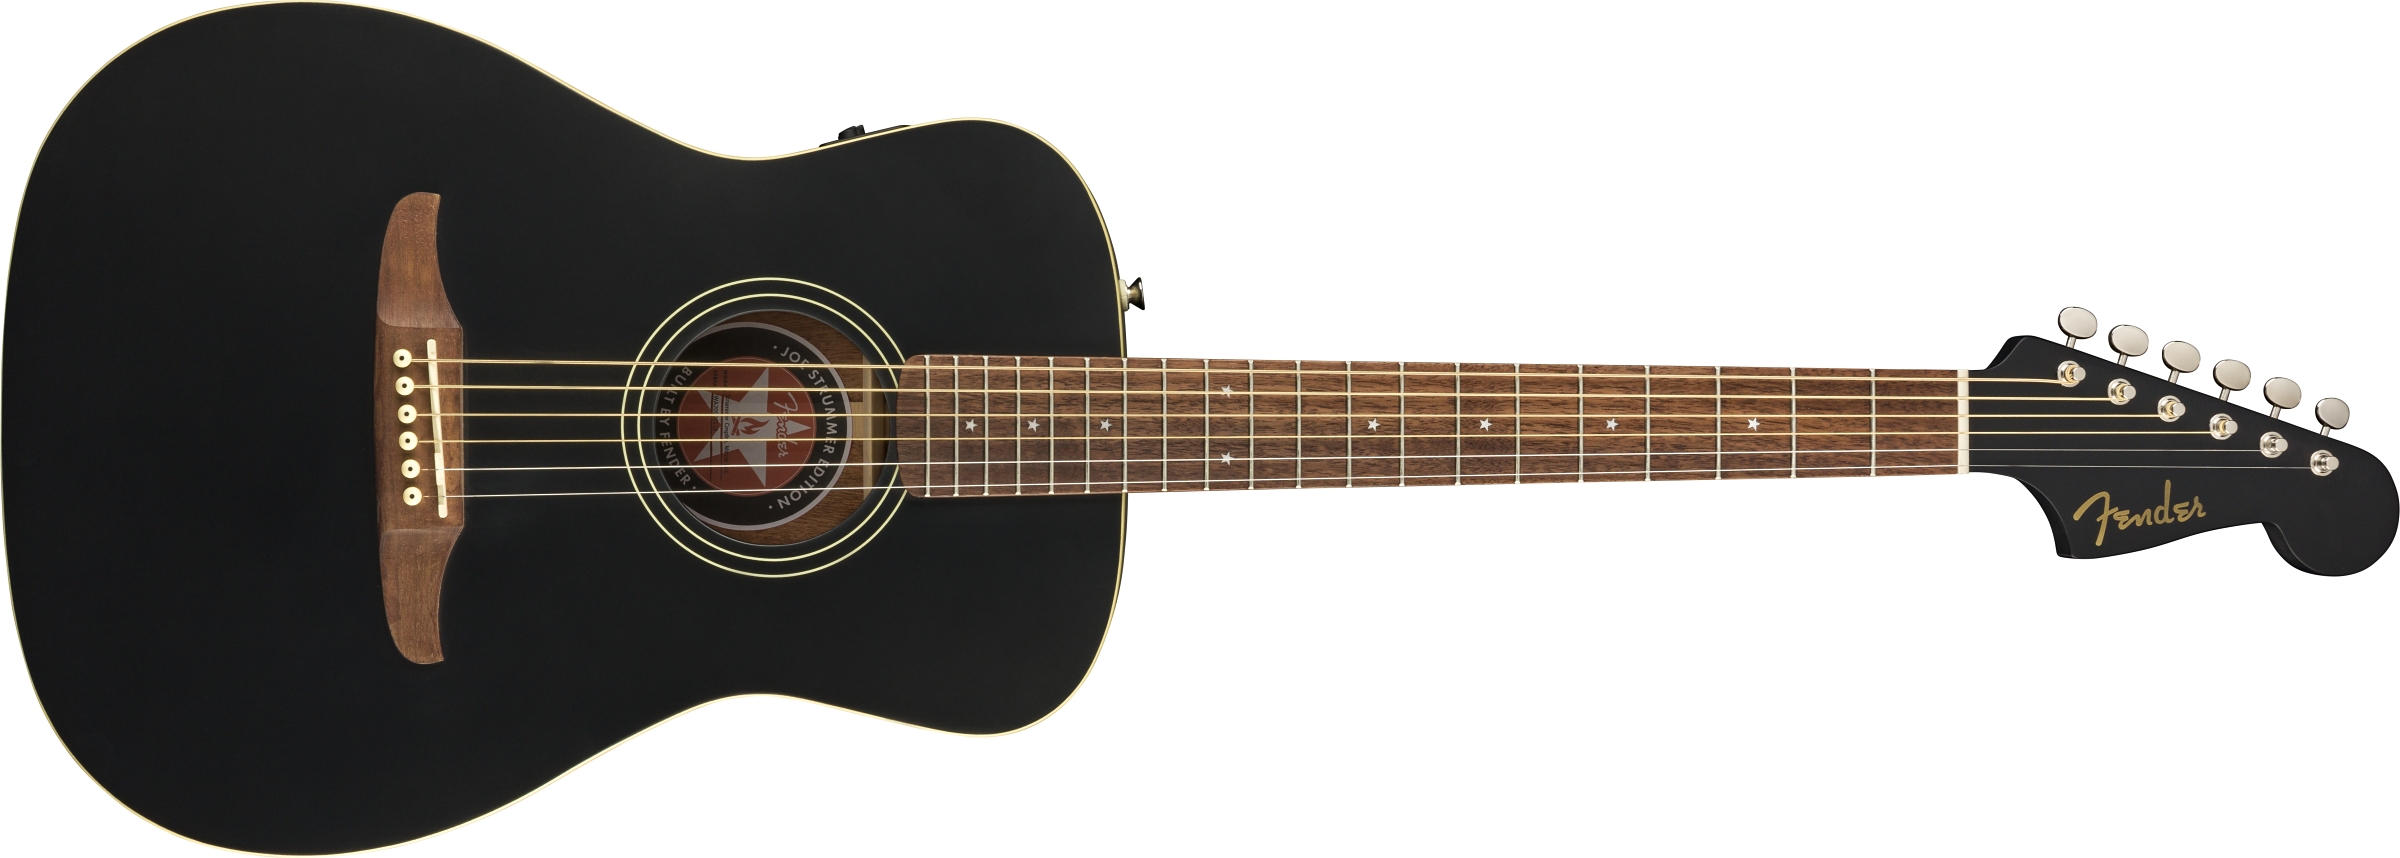 Fender Joe Strummer Campfire Acoustic colors available